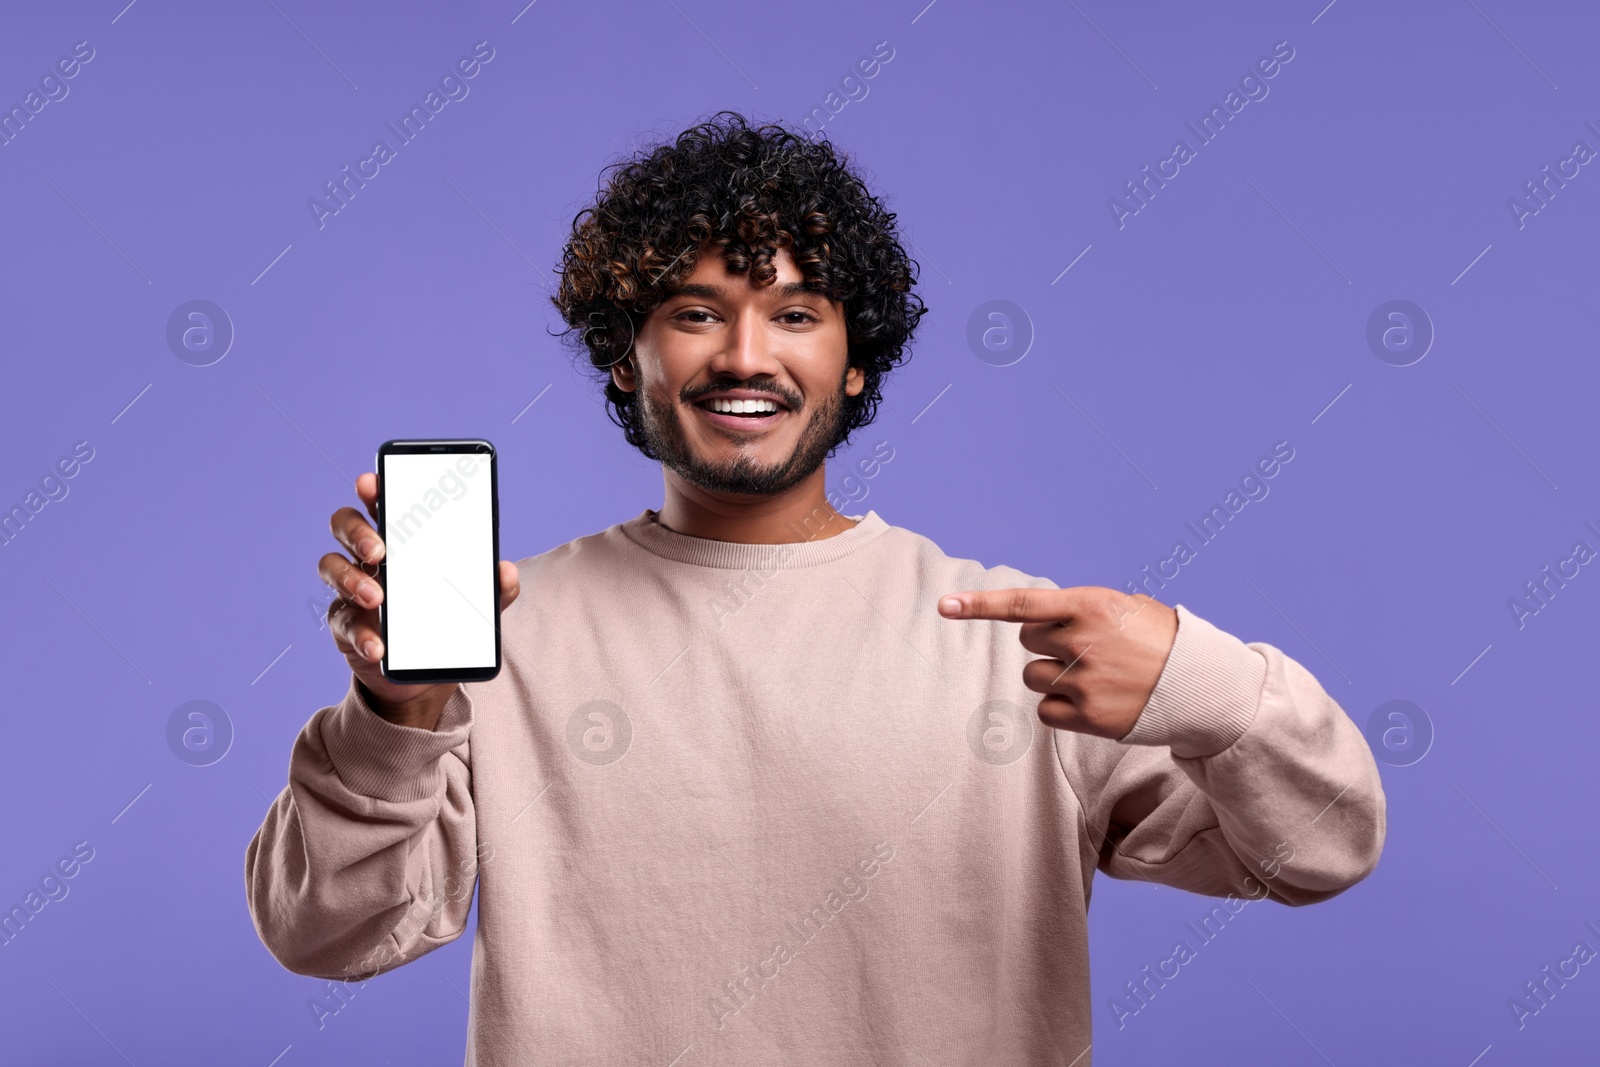 Photo of Handsome smiling man showing smartphone on violet background